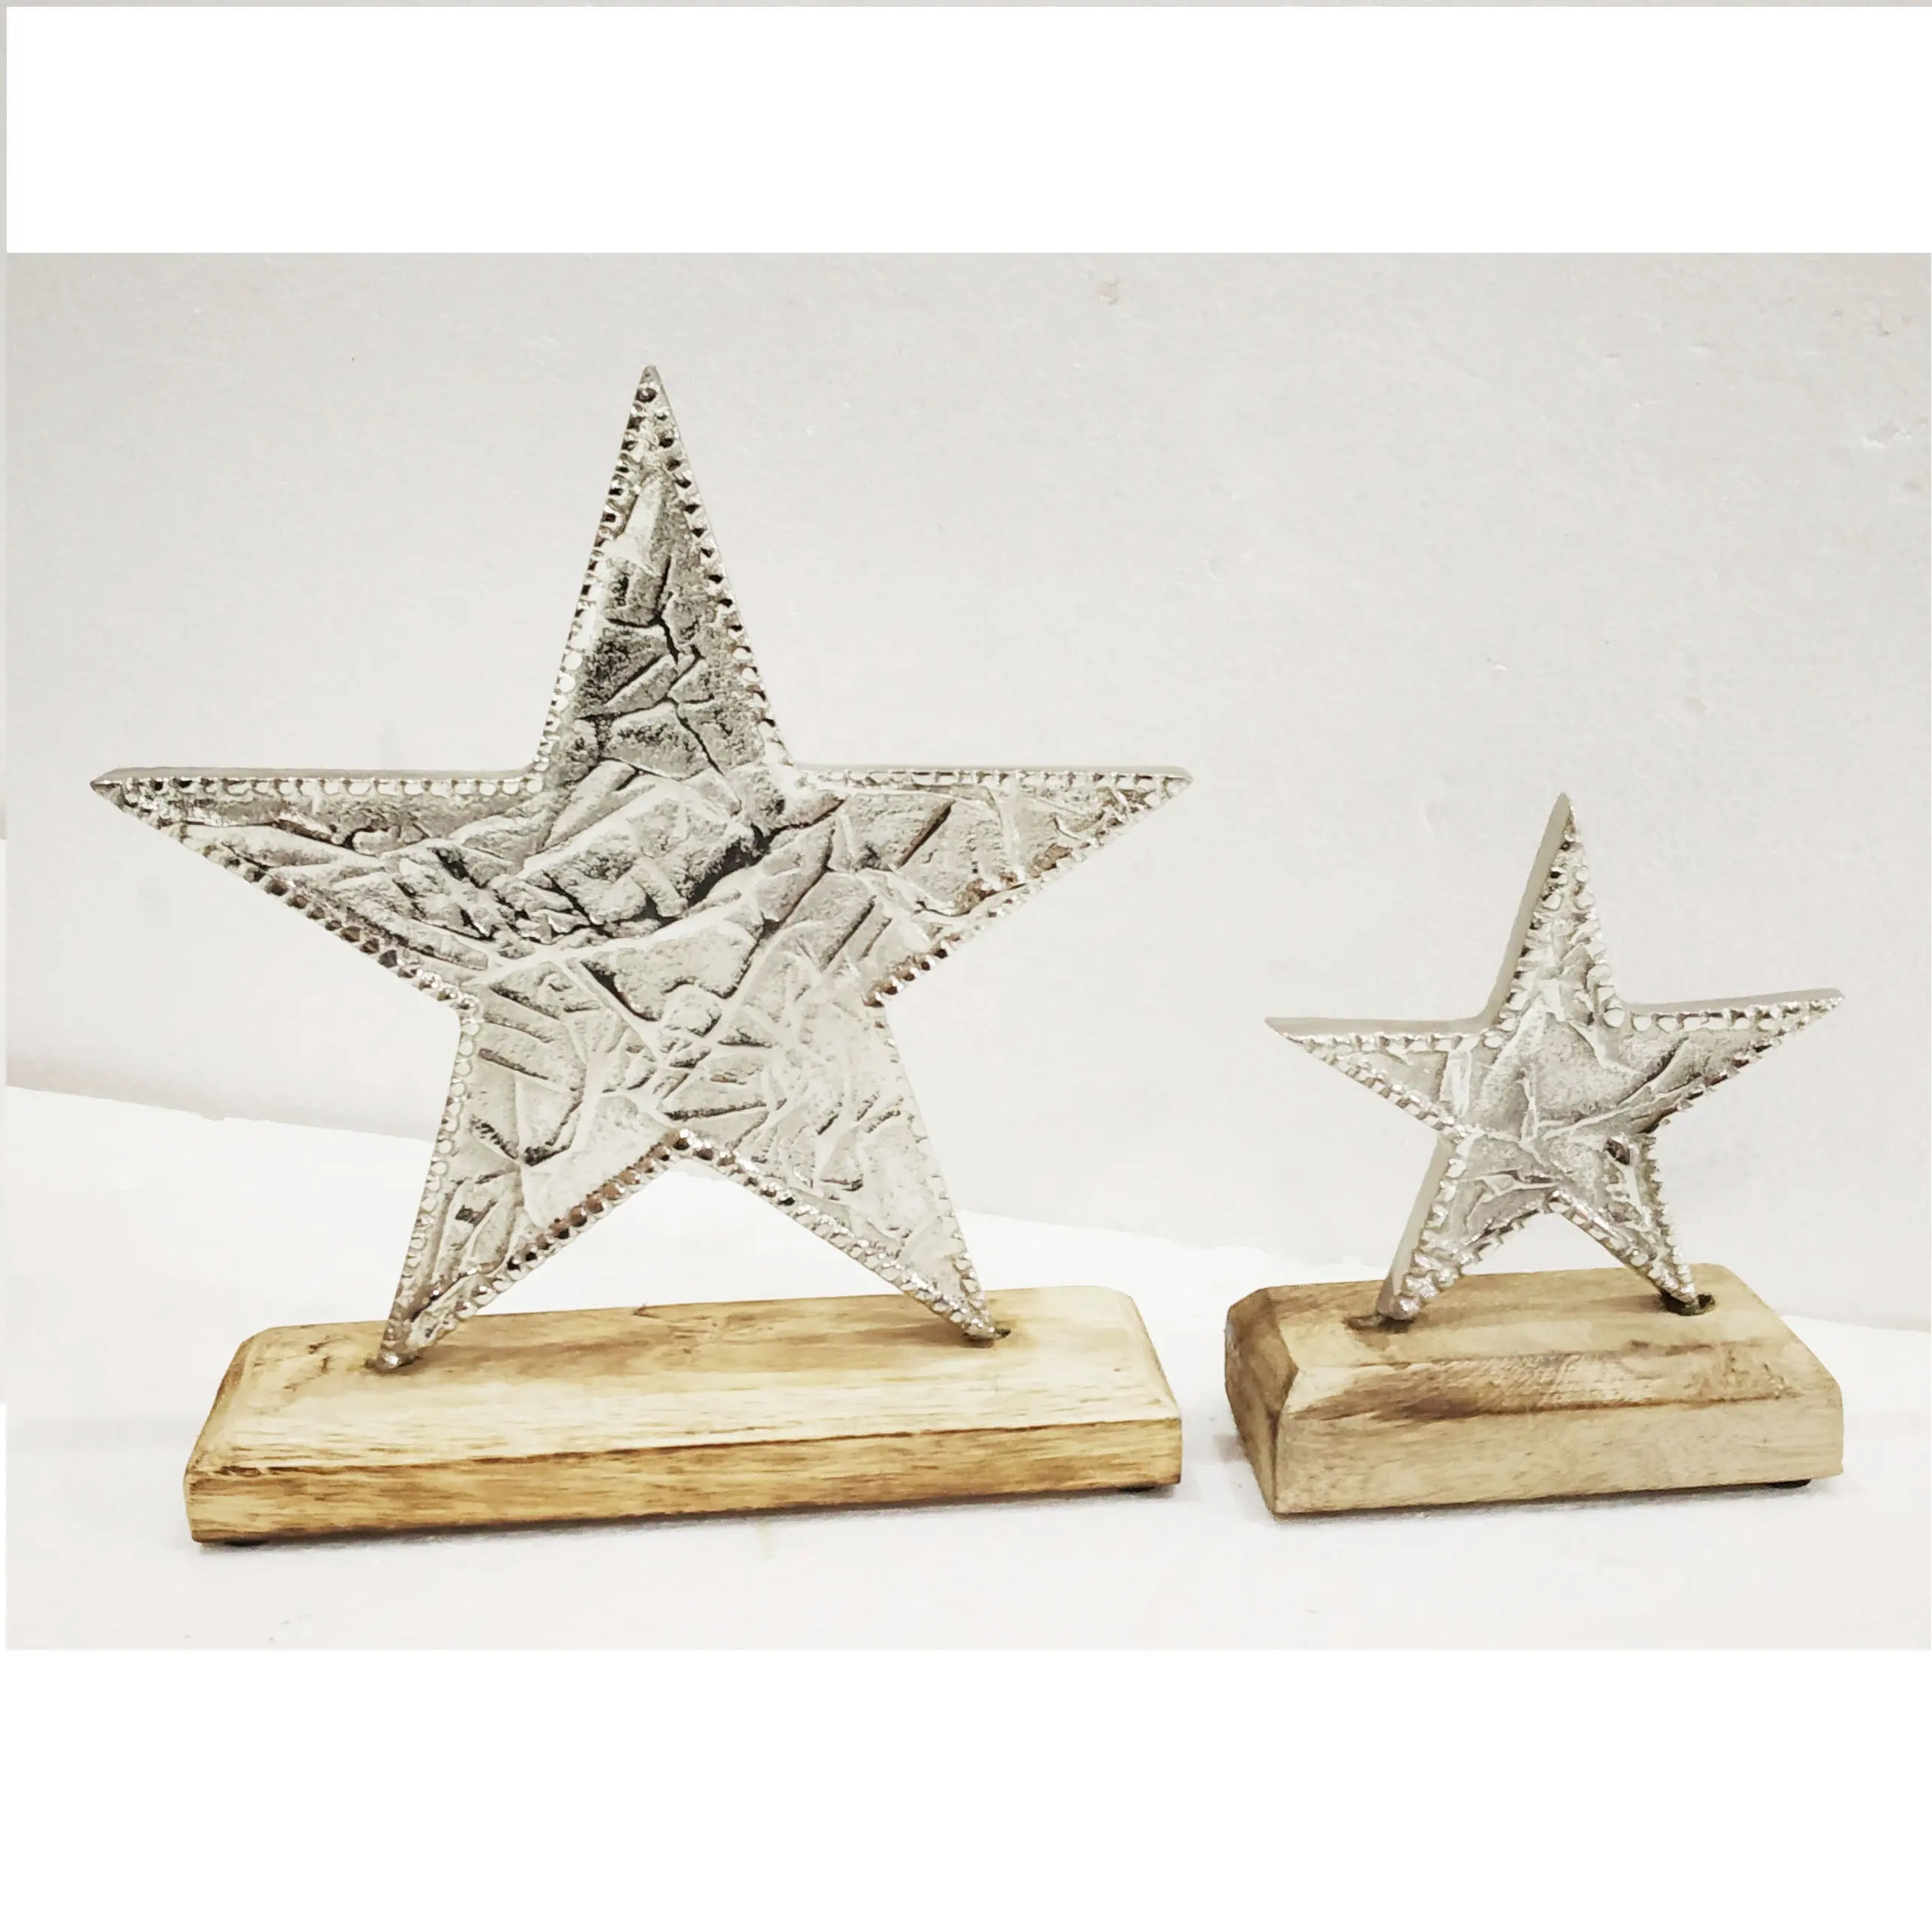 Bintang Berdiri Berkilau/Dekorasi Aluminium Dekoratif Bintang untuk Dekorasi Natal